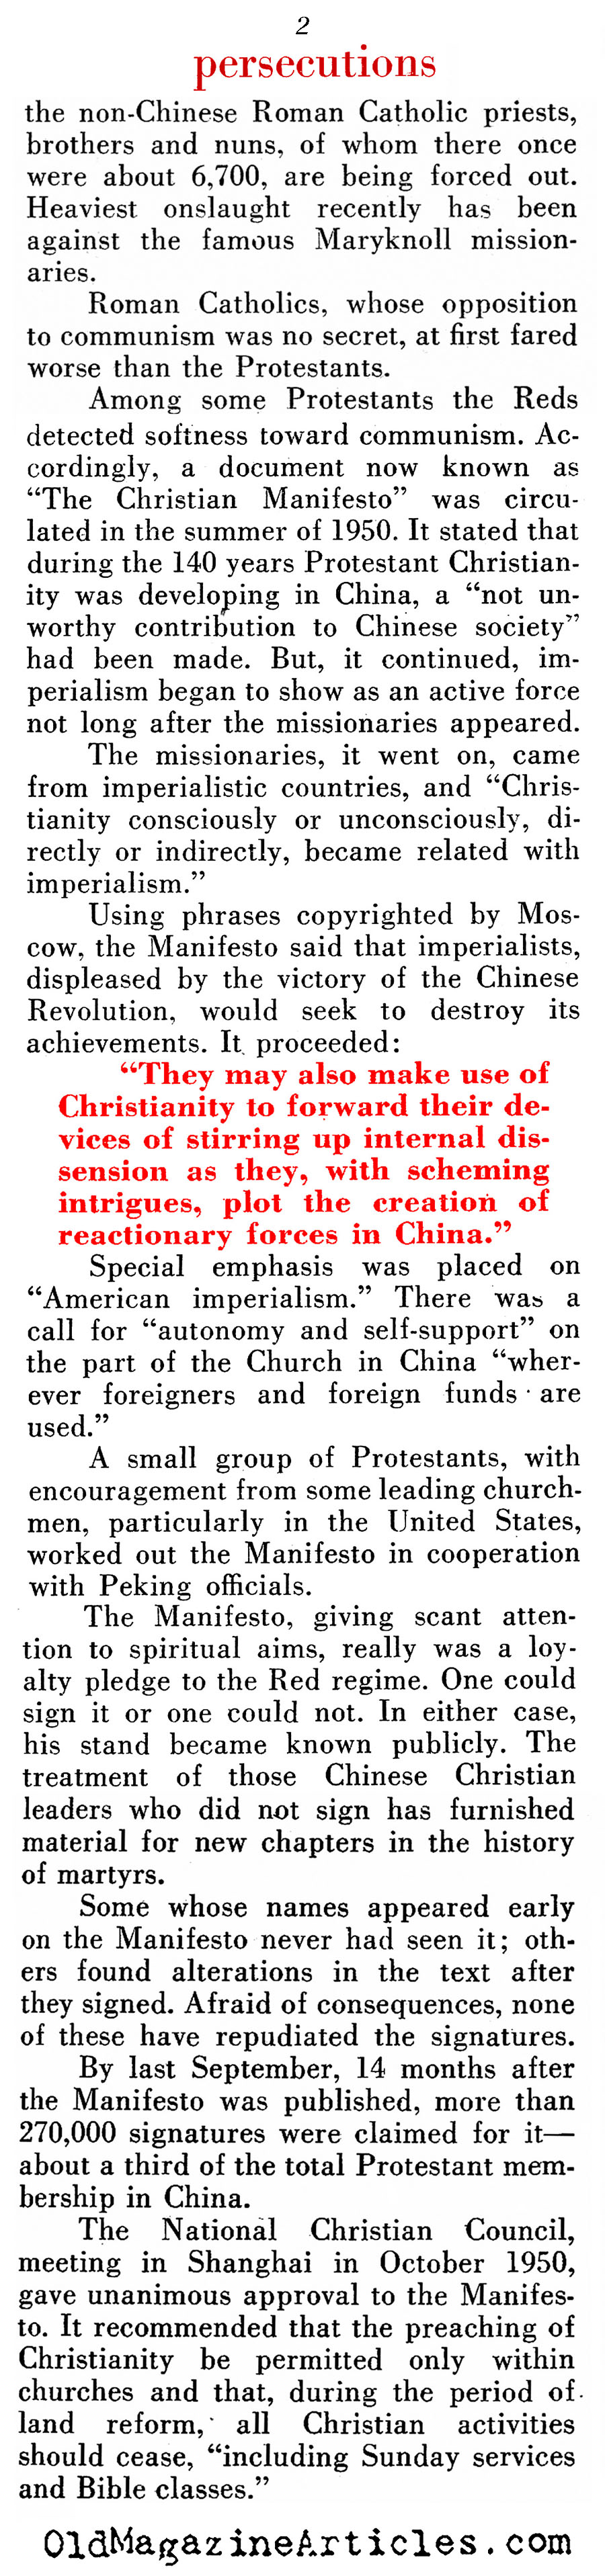 The Lot of Chinese Christians (Pathfinder Magazine, 1952)